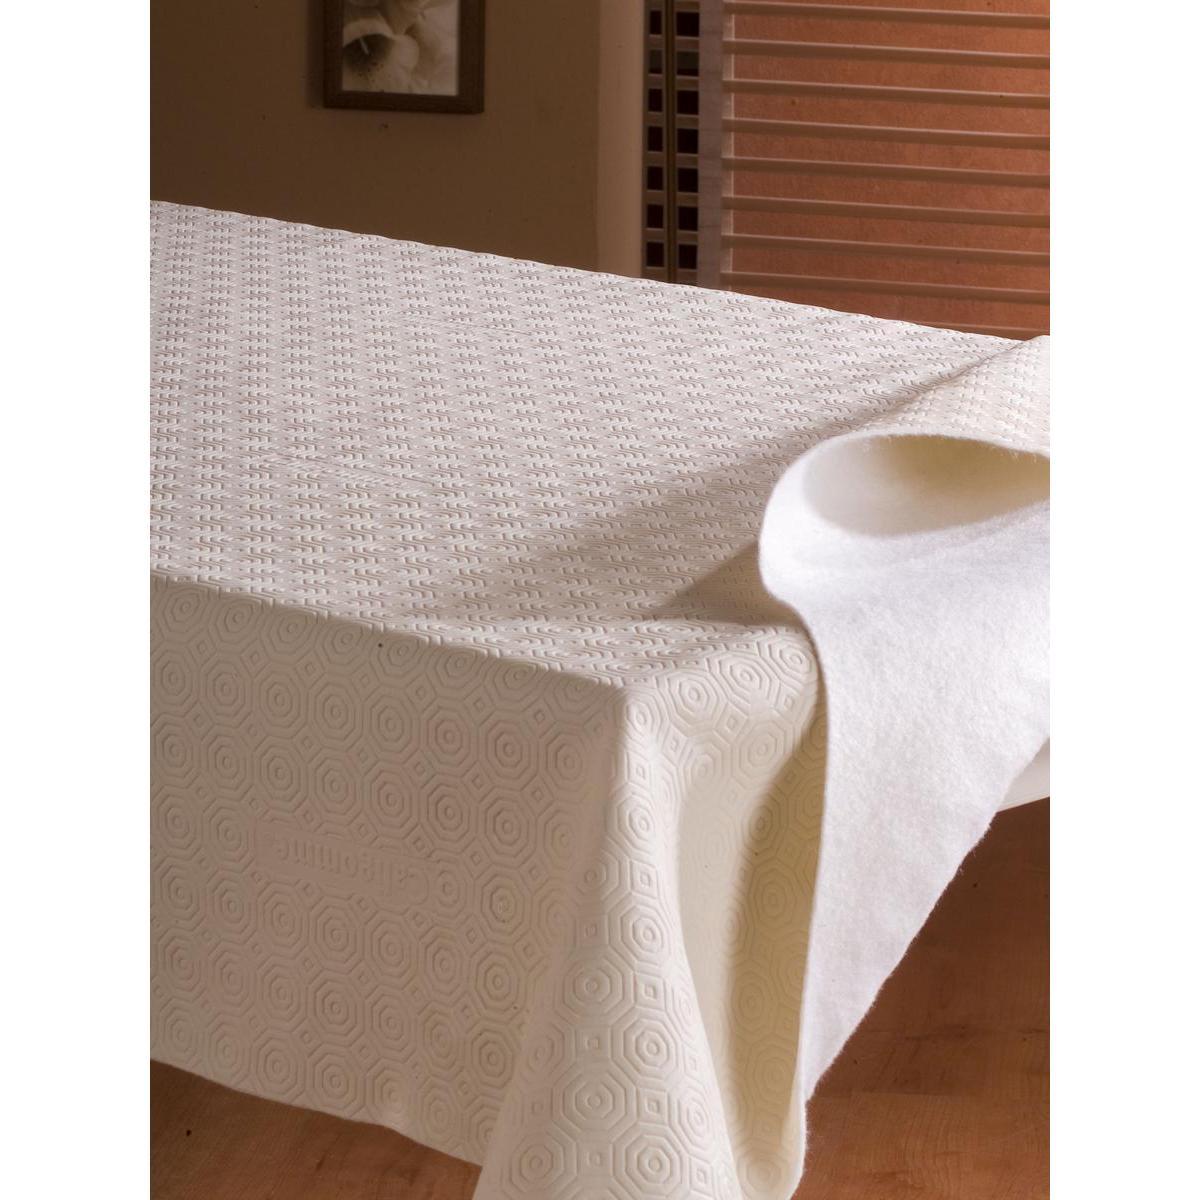 Protège table ronde - PVC et polyester - Ø 135 cm - Blanc